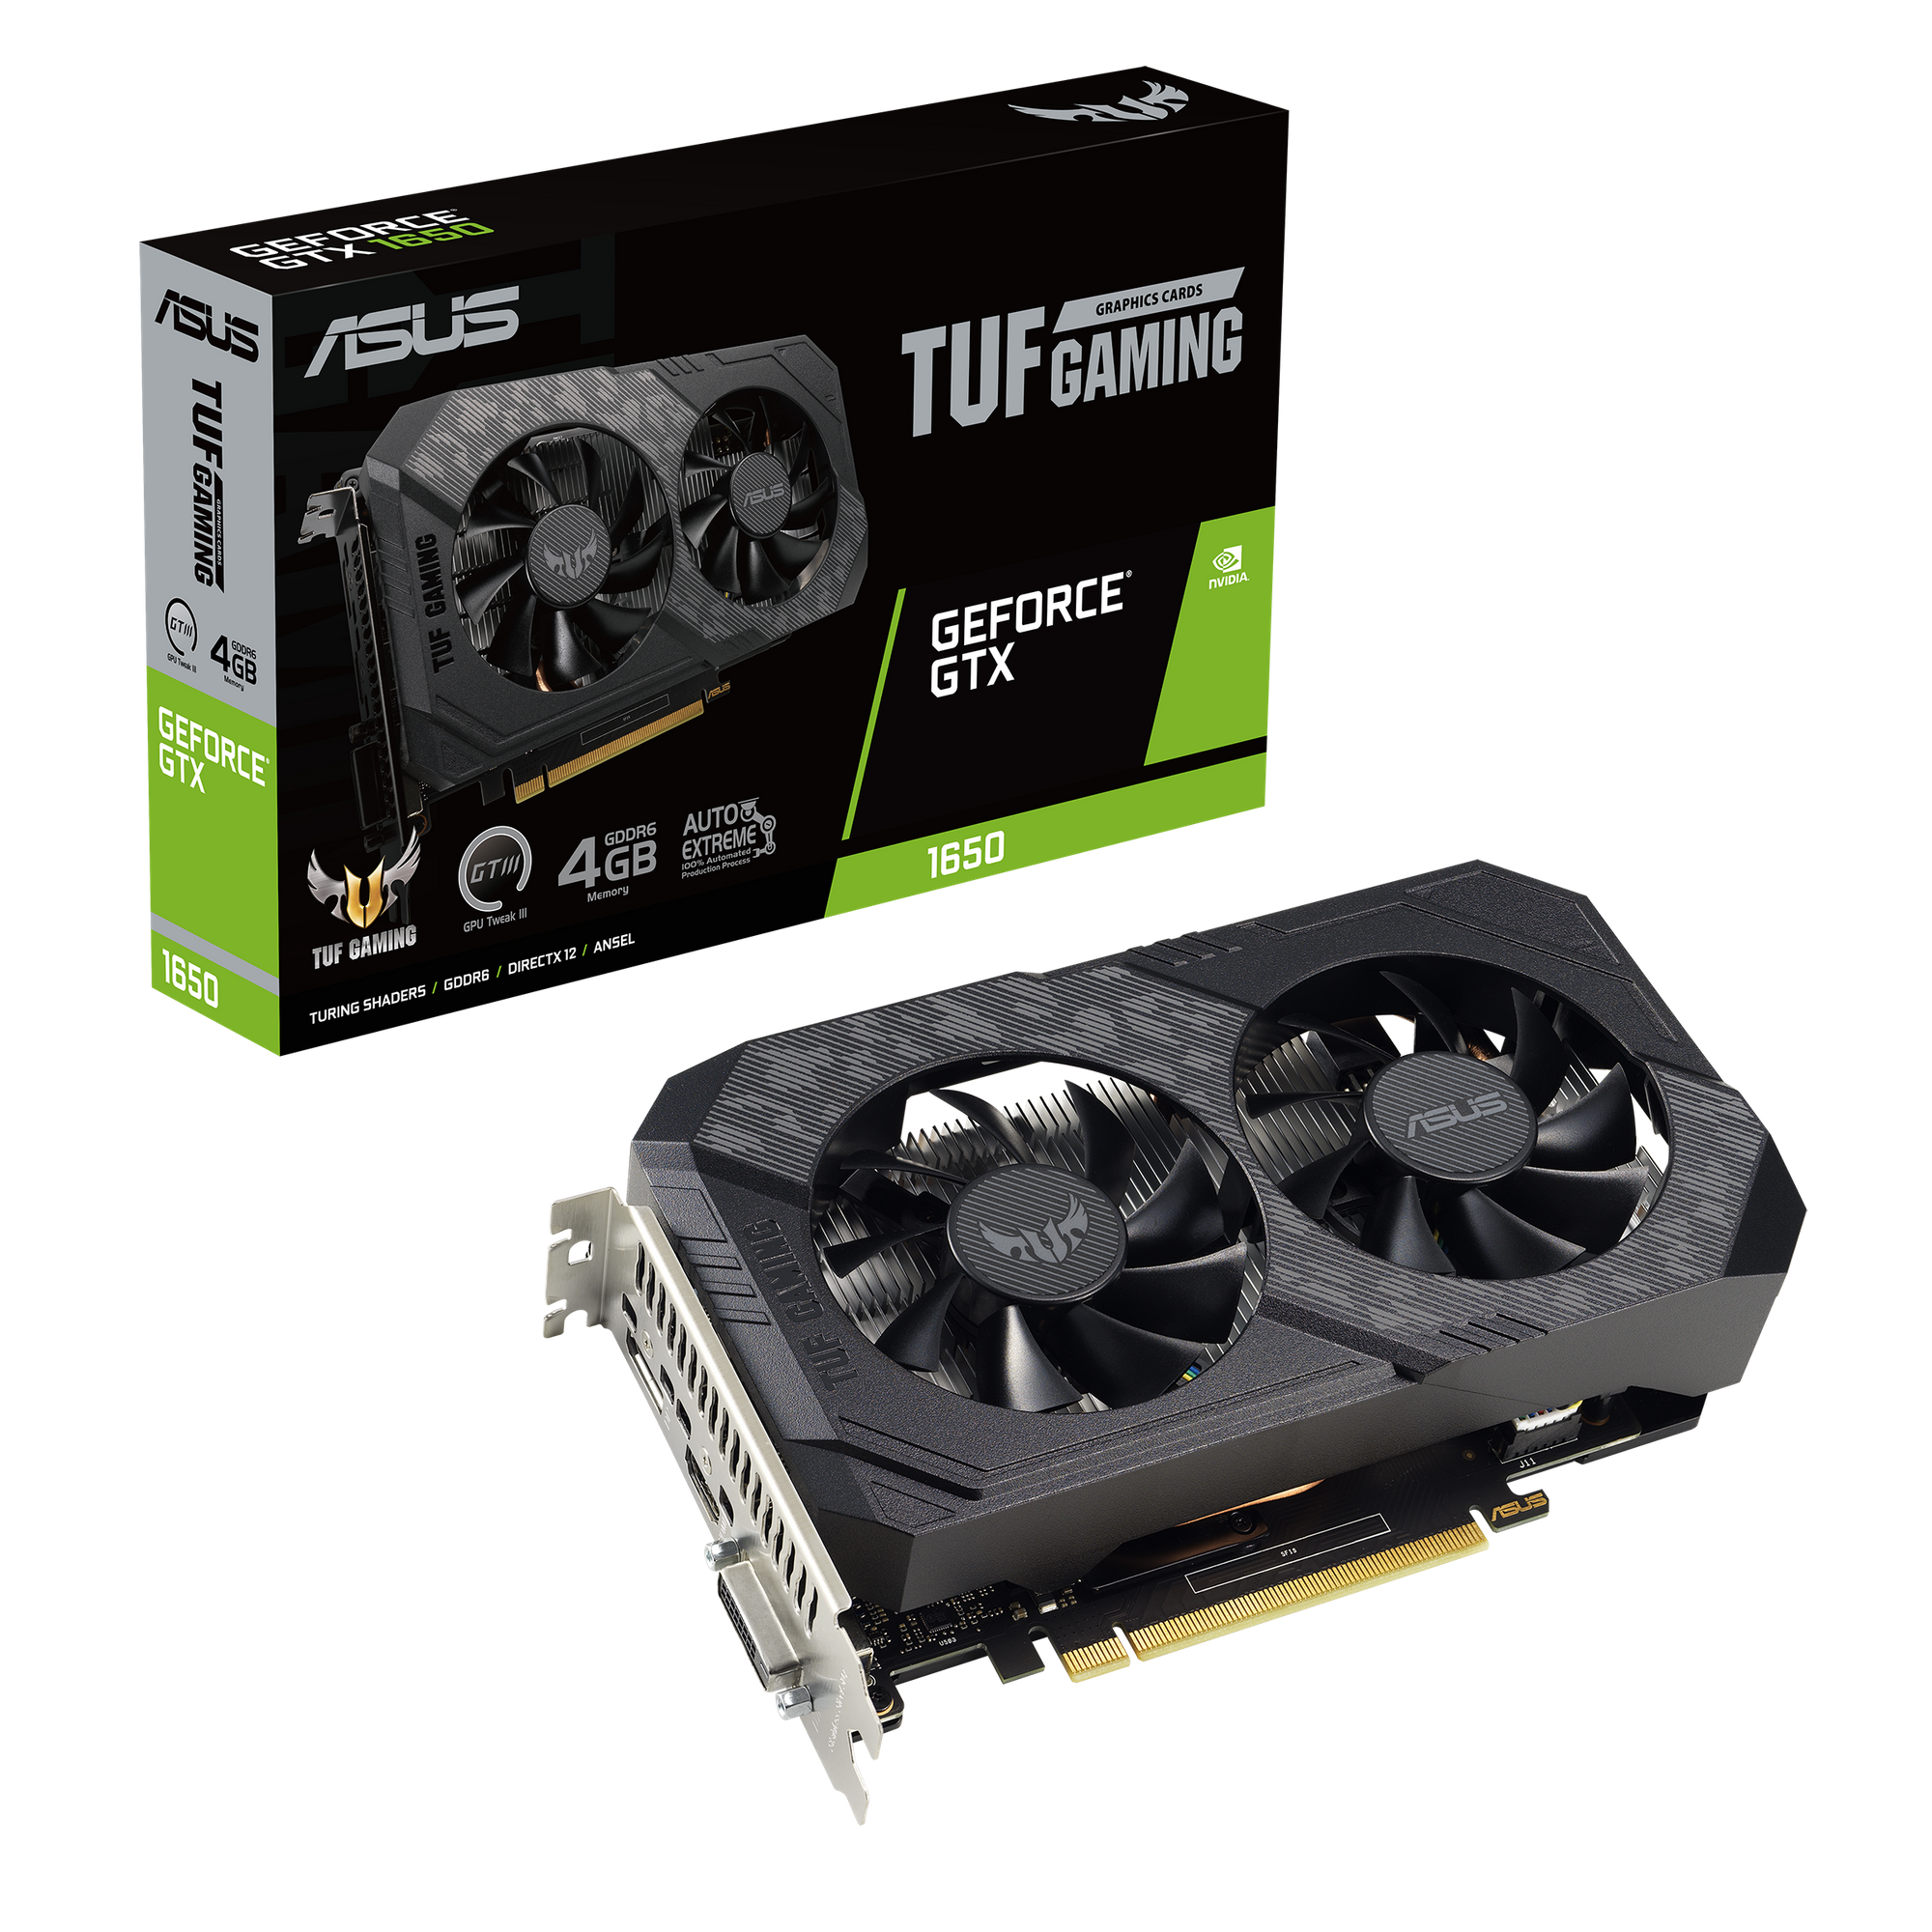 ASUS TUF Graphics Gaming GTX GeForce (NVIDIA, 1650 card)